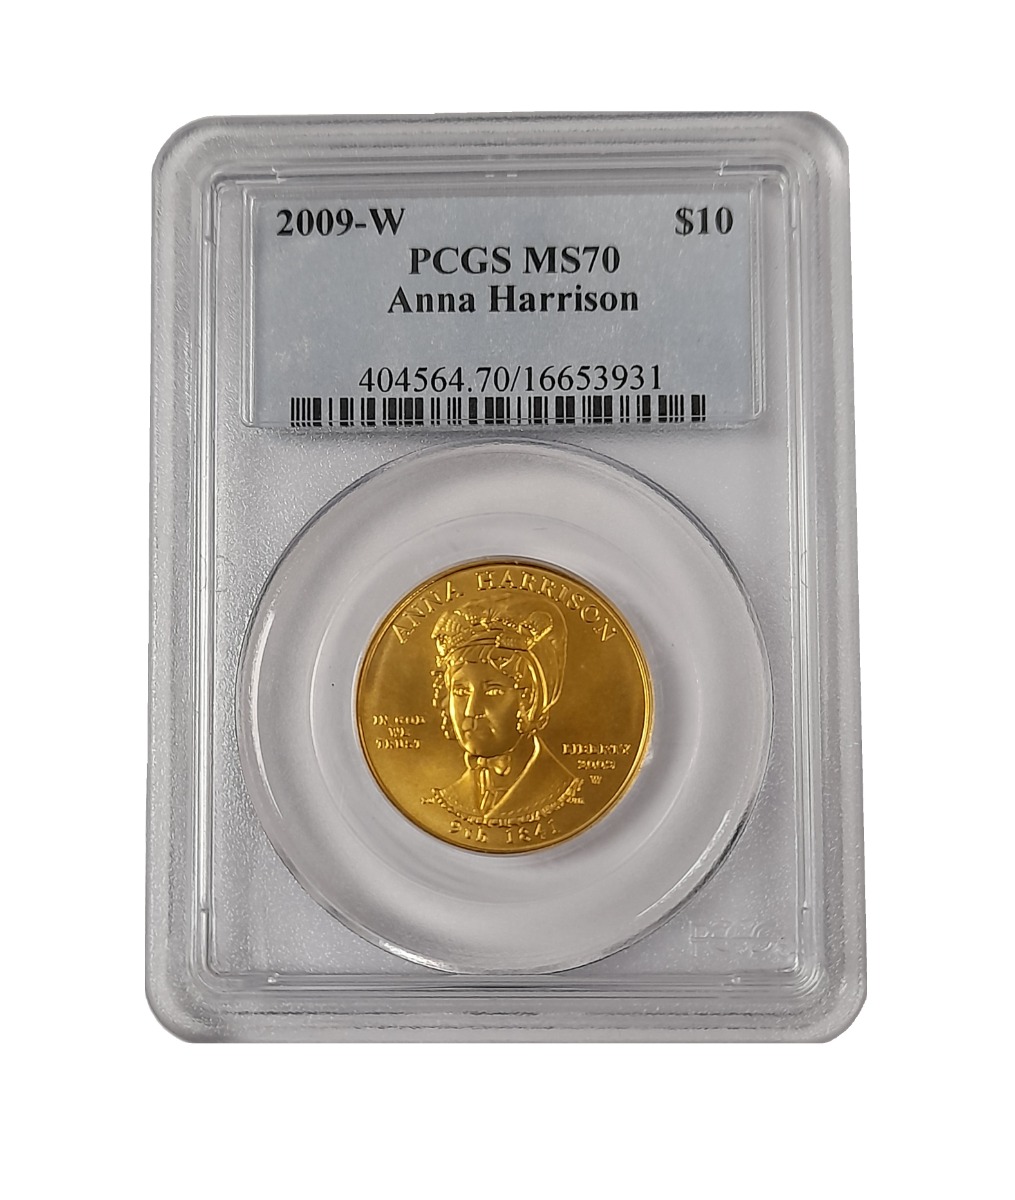 $10 Anna Harrison Gold Coin 2009-W PCGS MS70